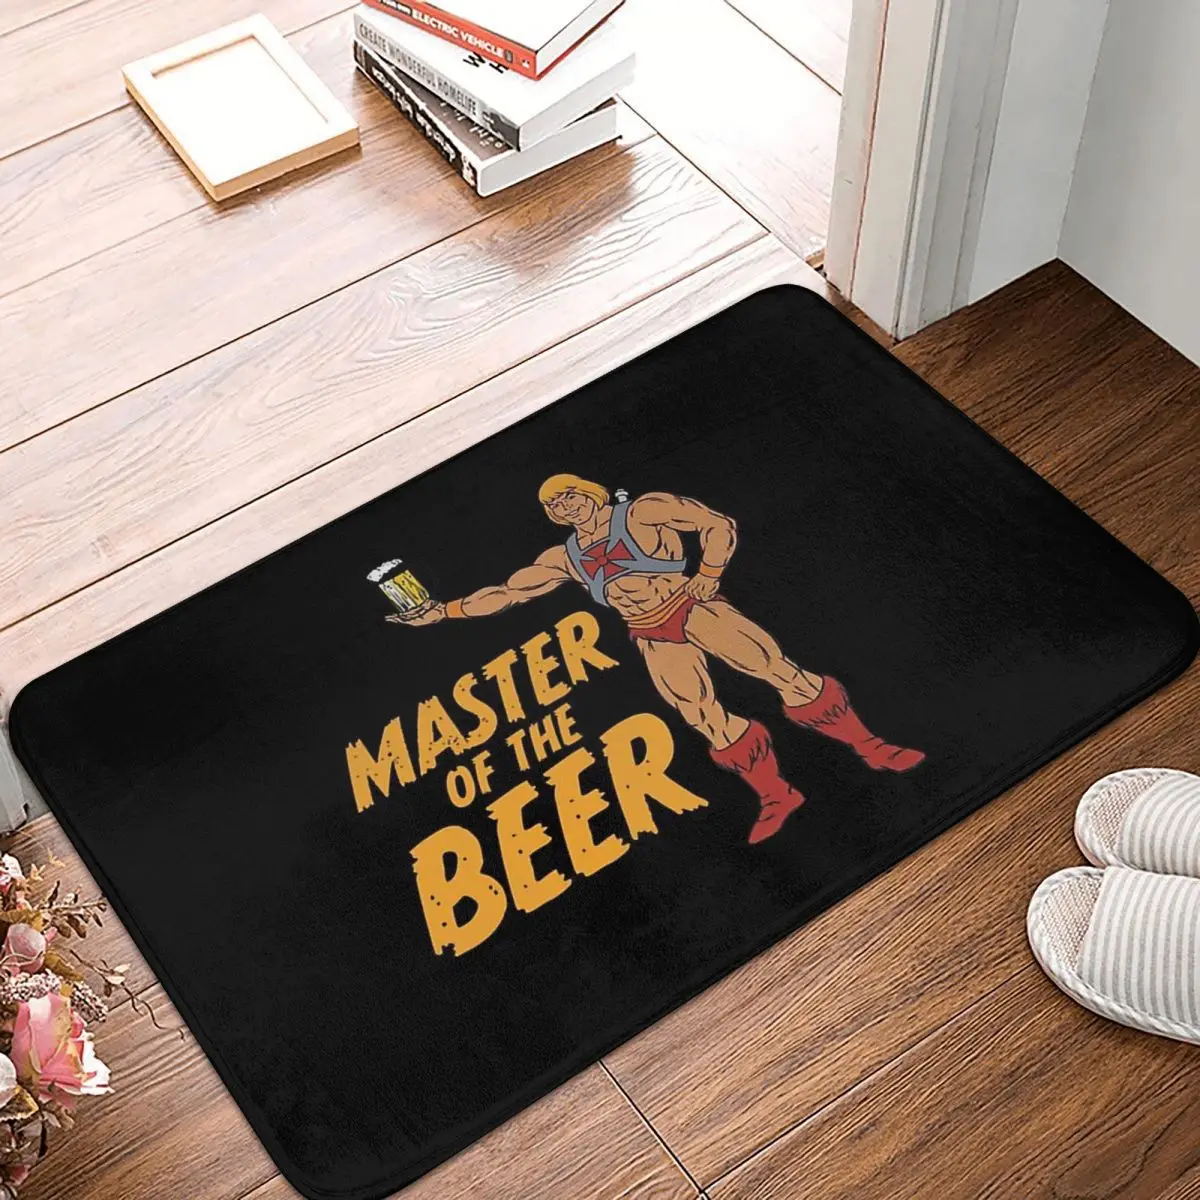 He Man and the Masters of the Universe Bath Mat Beer Doormat Kitchen Carpet Entrance Door Rug Home Decor